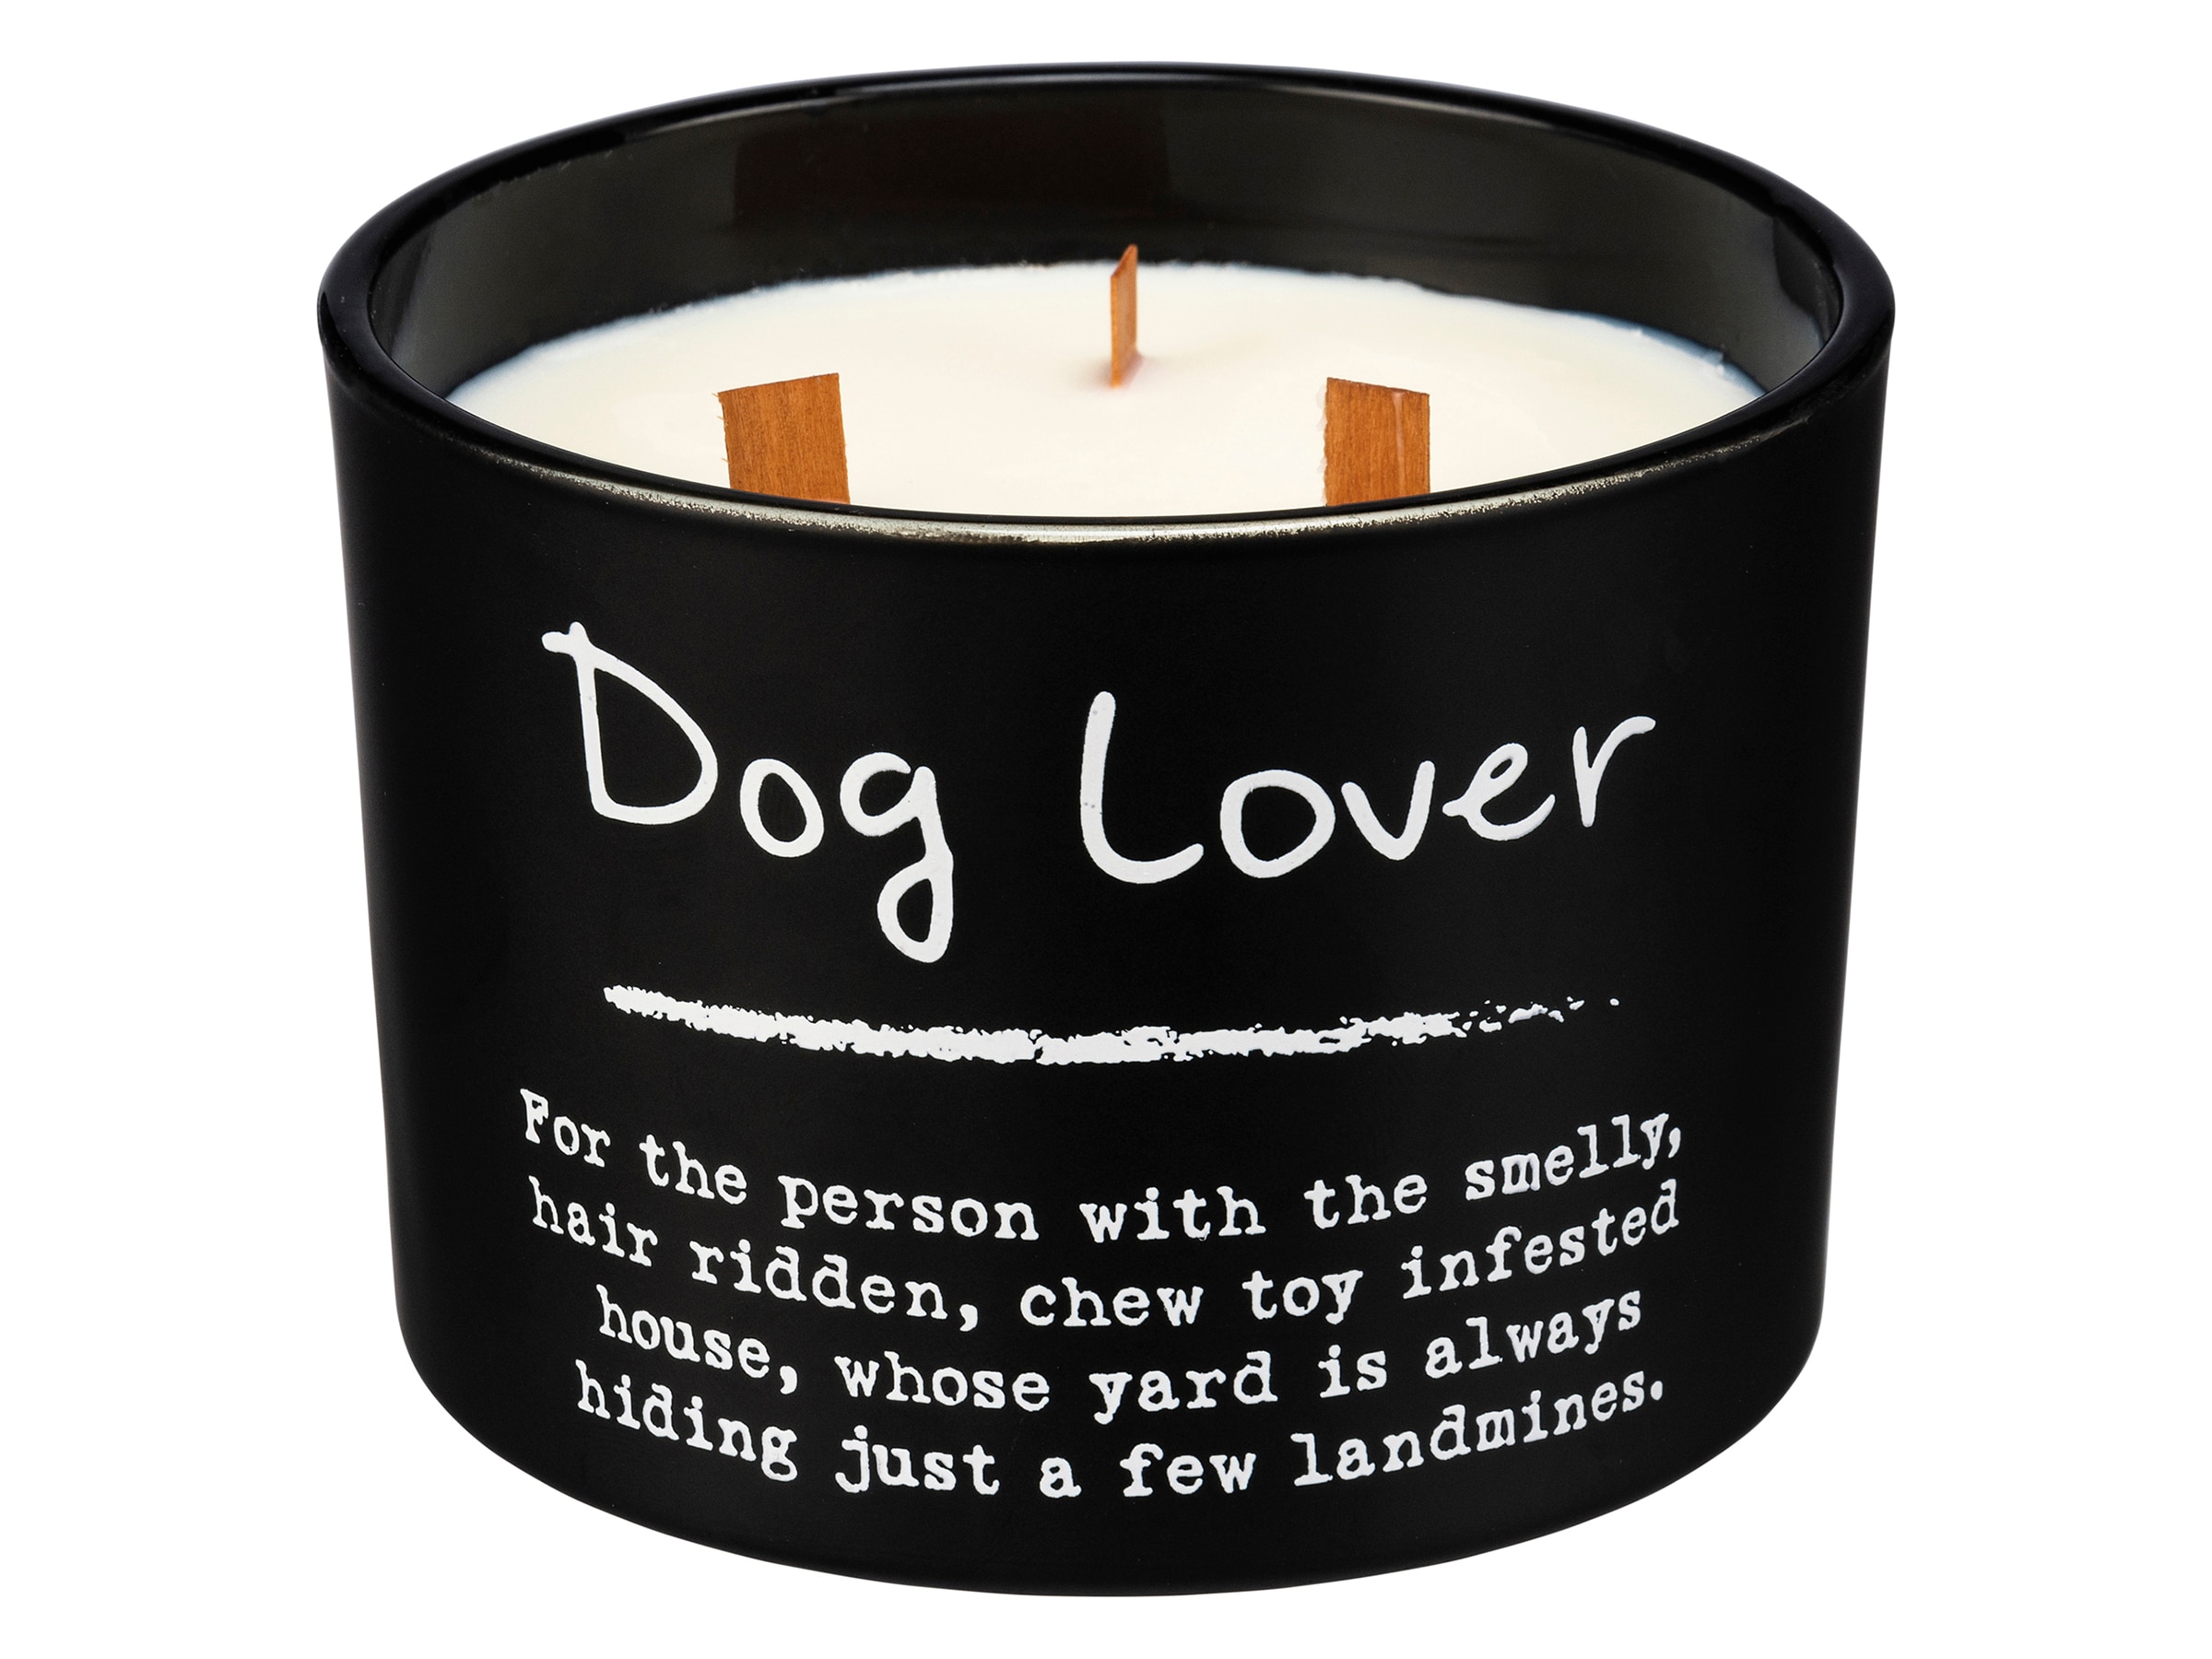 Dog Lover Sea Salt Candle 3.5"W x 4.5"H